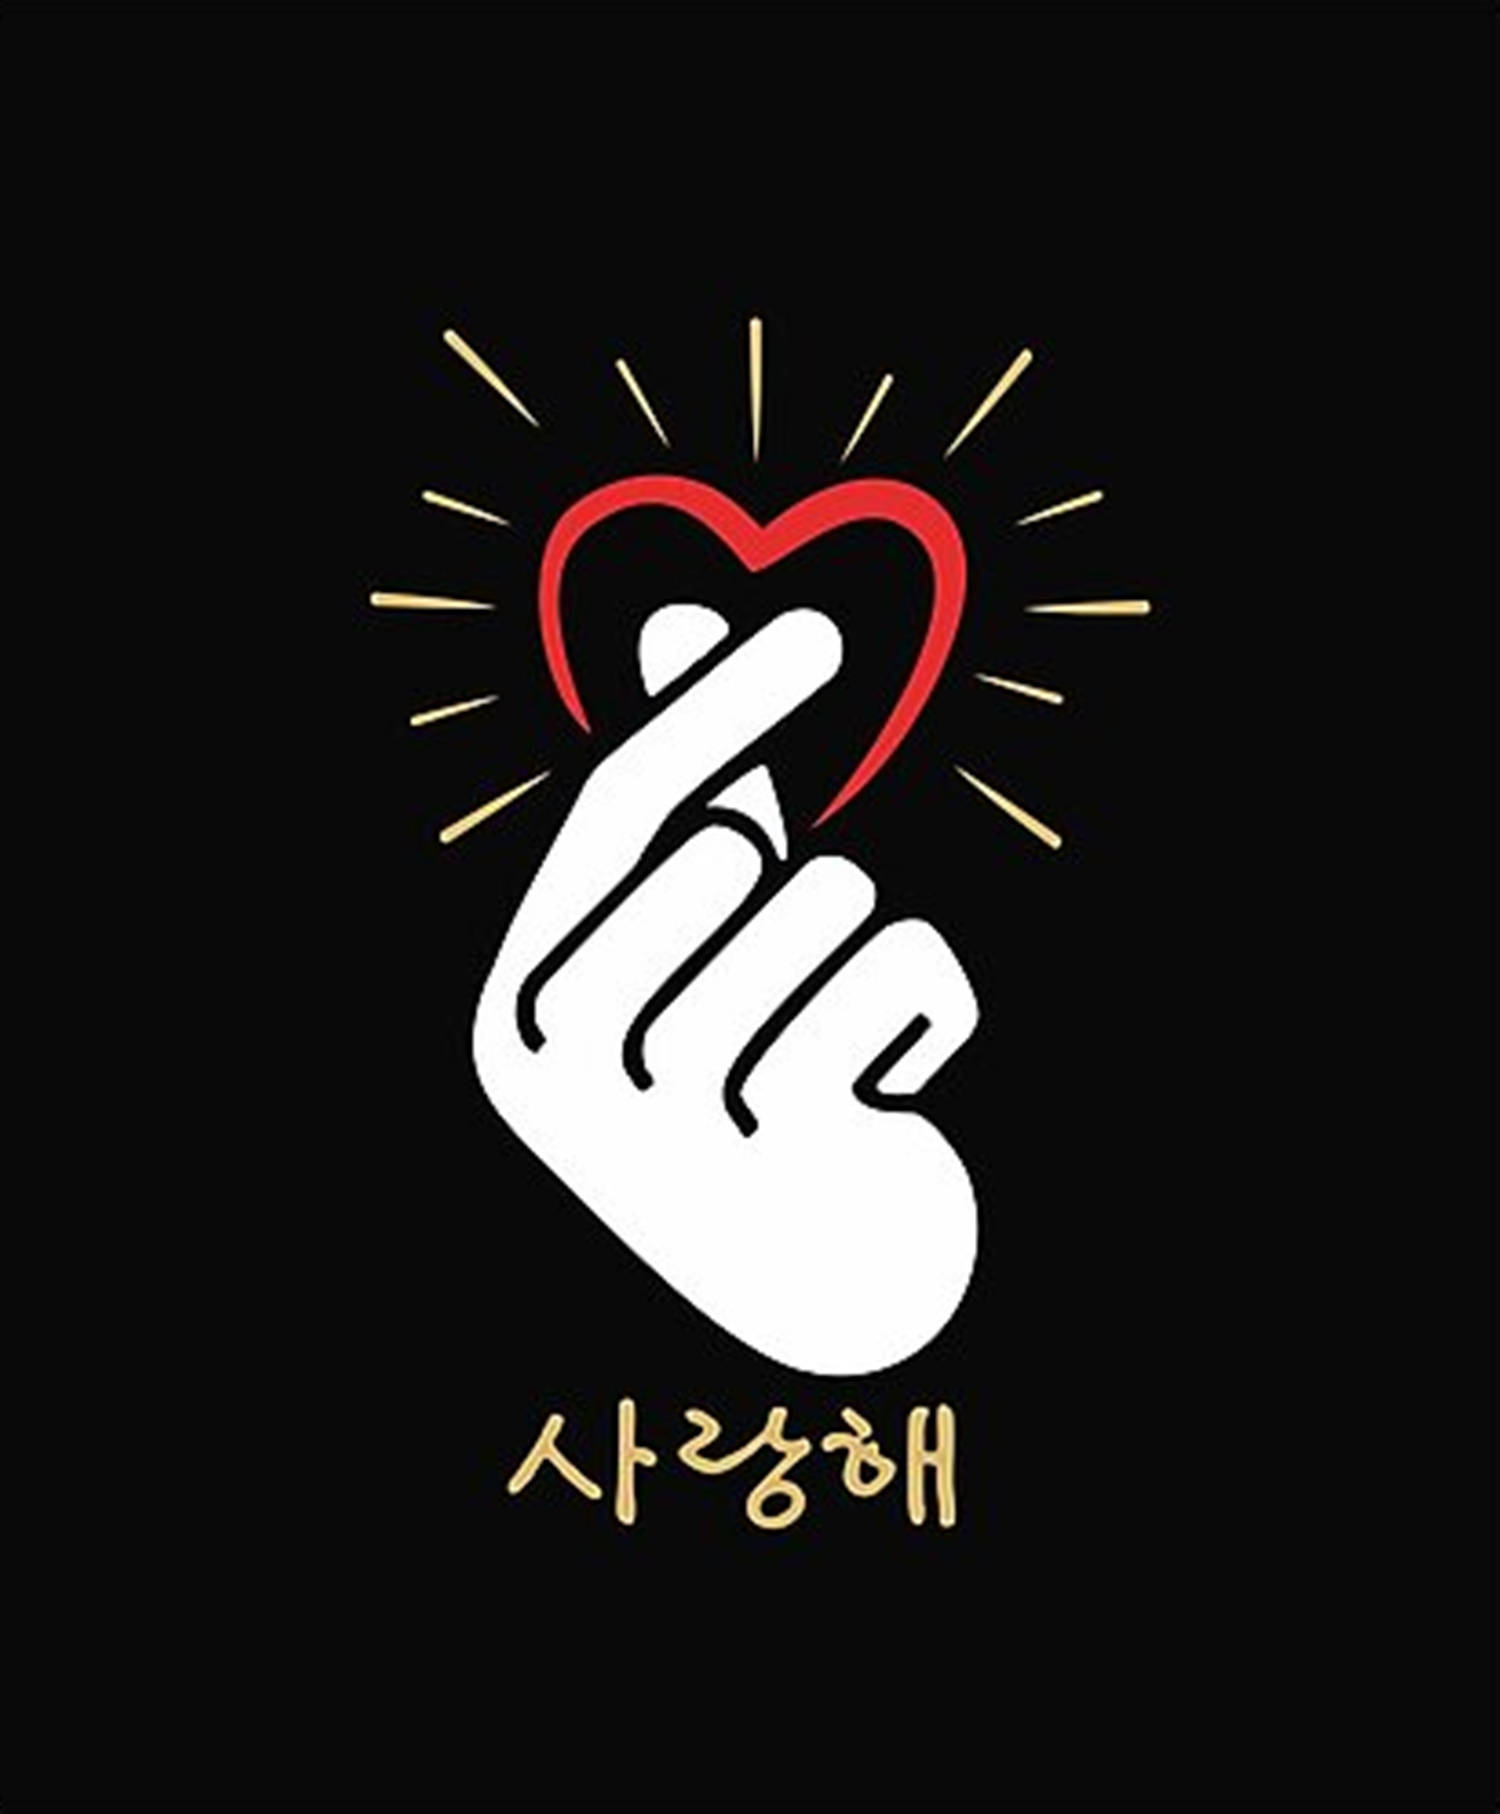 Caption: Korean Finger Heart: Expressing Love Beyond Boundaries Wallpaper